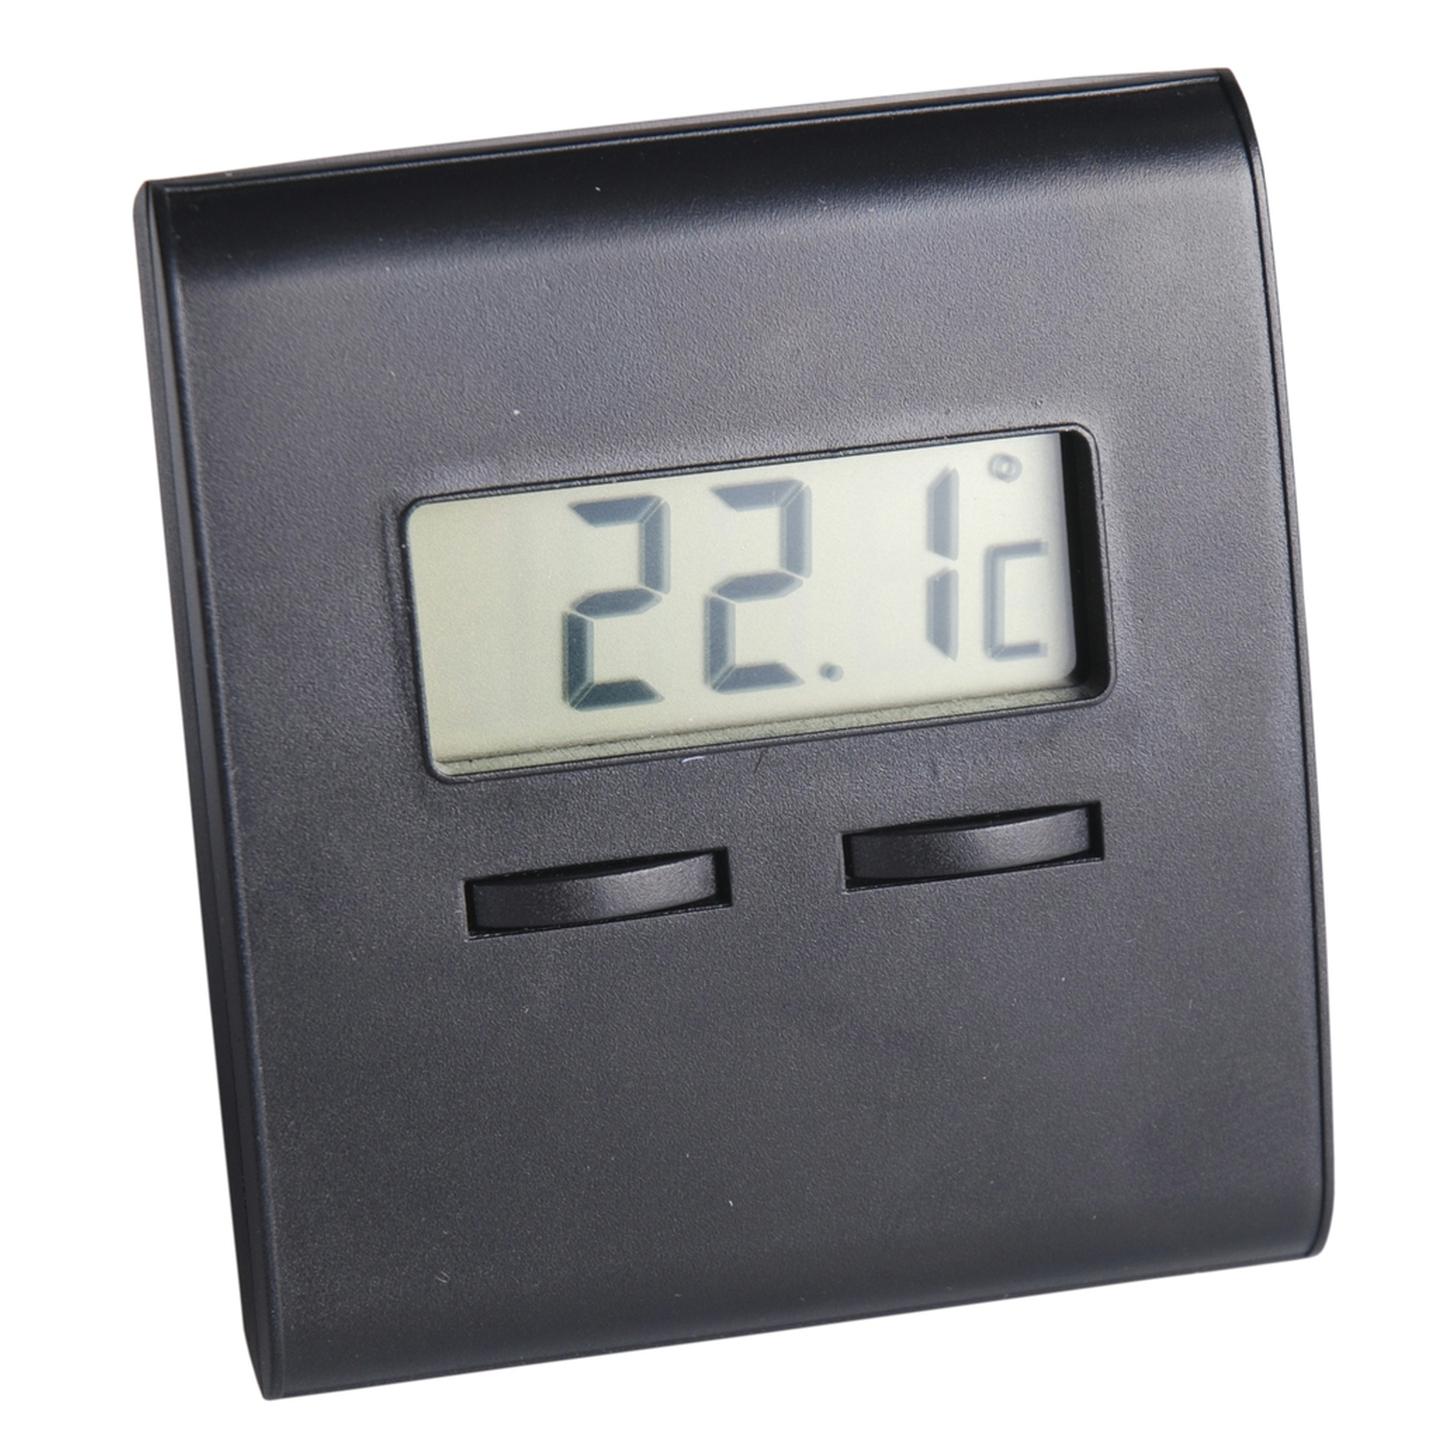 Indoor Desk Thermometer